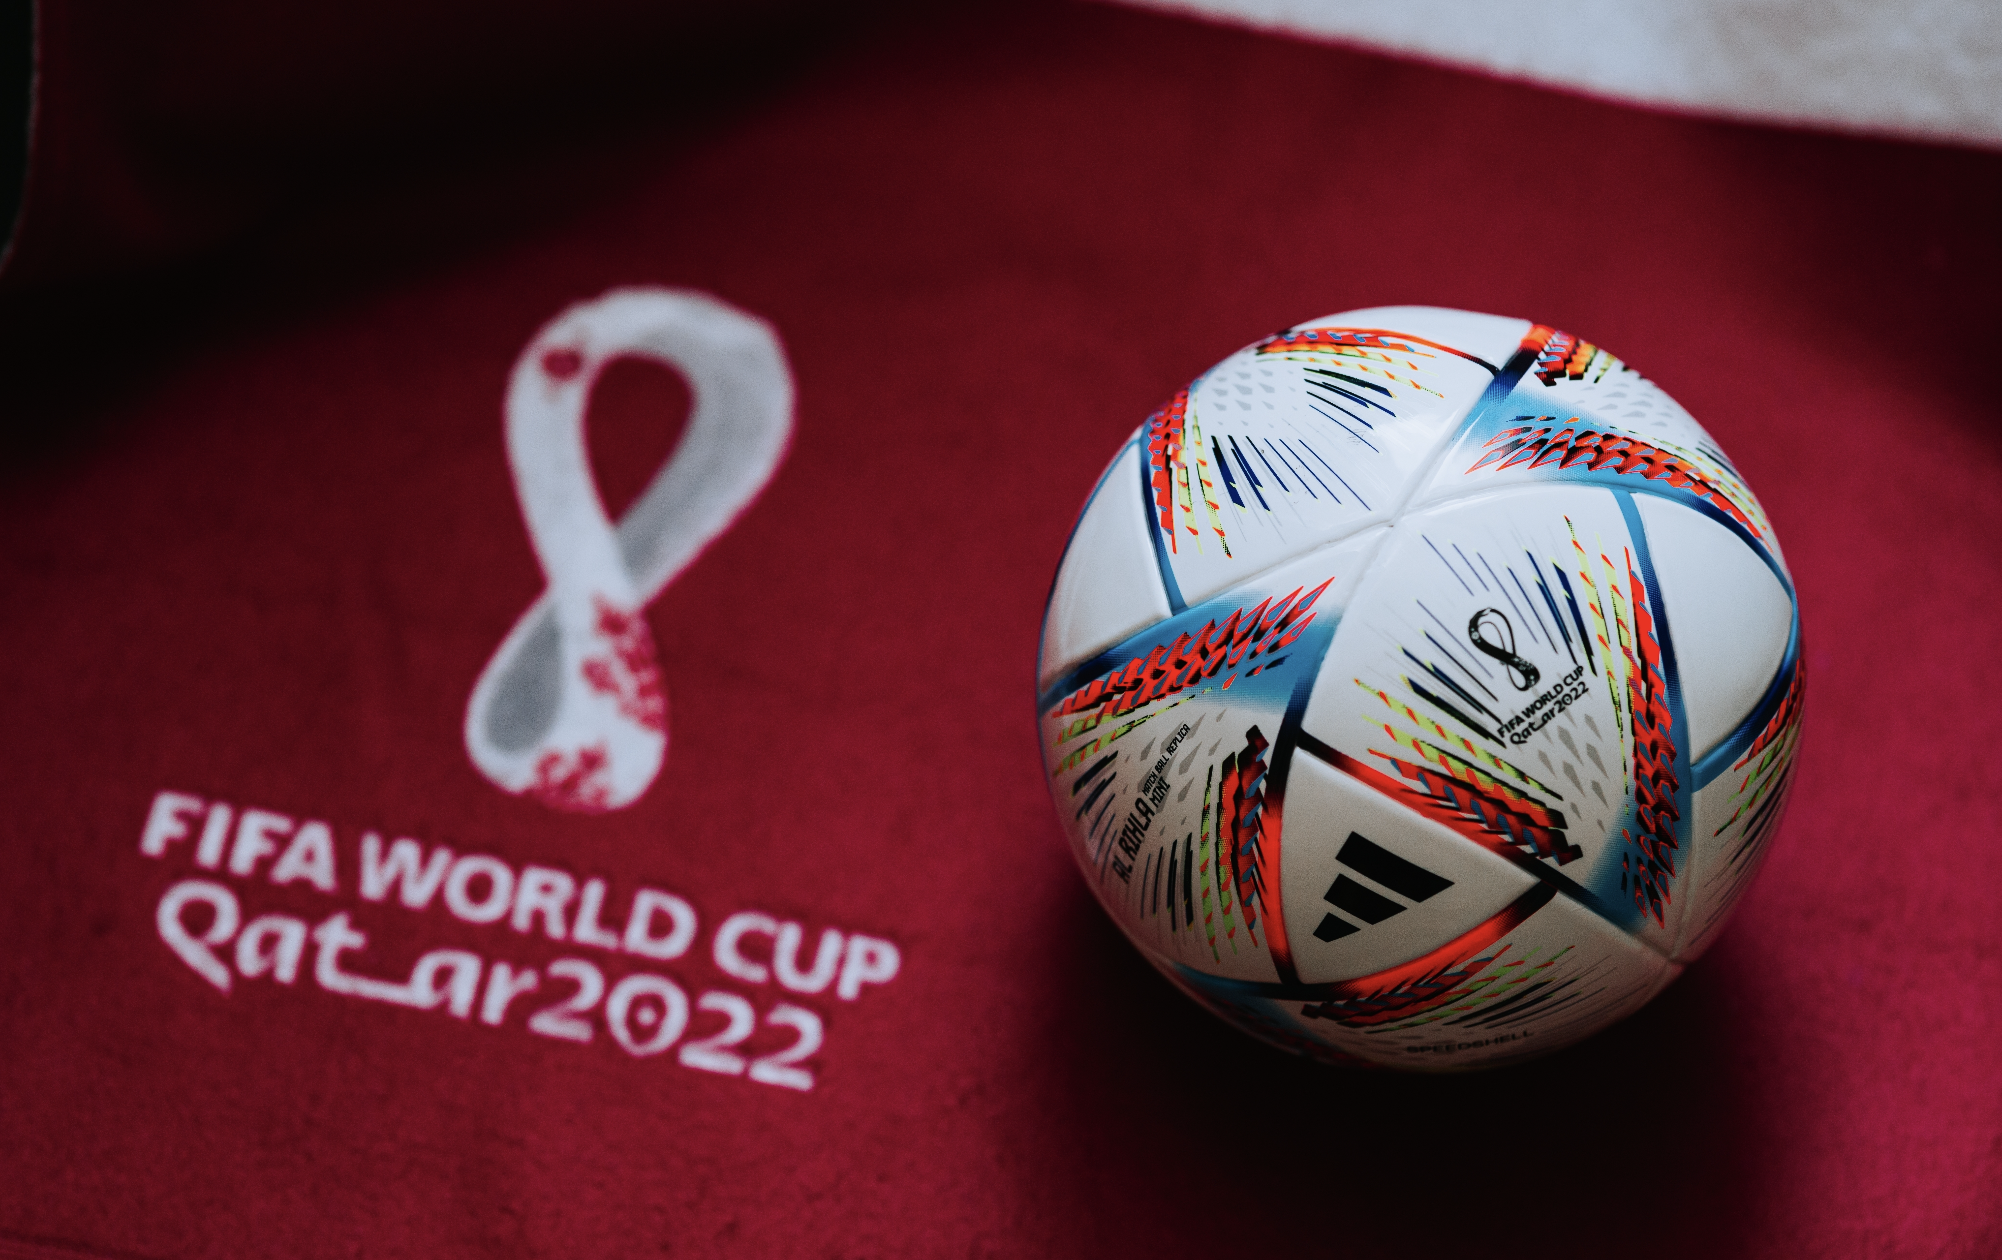 HR FOR WORLD CUP : ดูฟุตบอลโลกอย่างไรให้ได้งาน